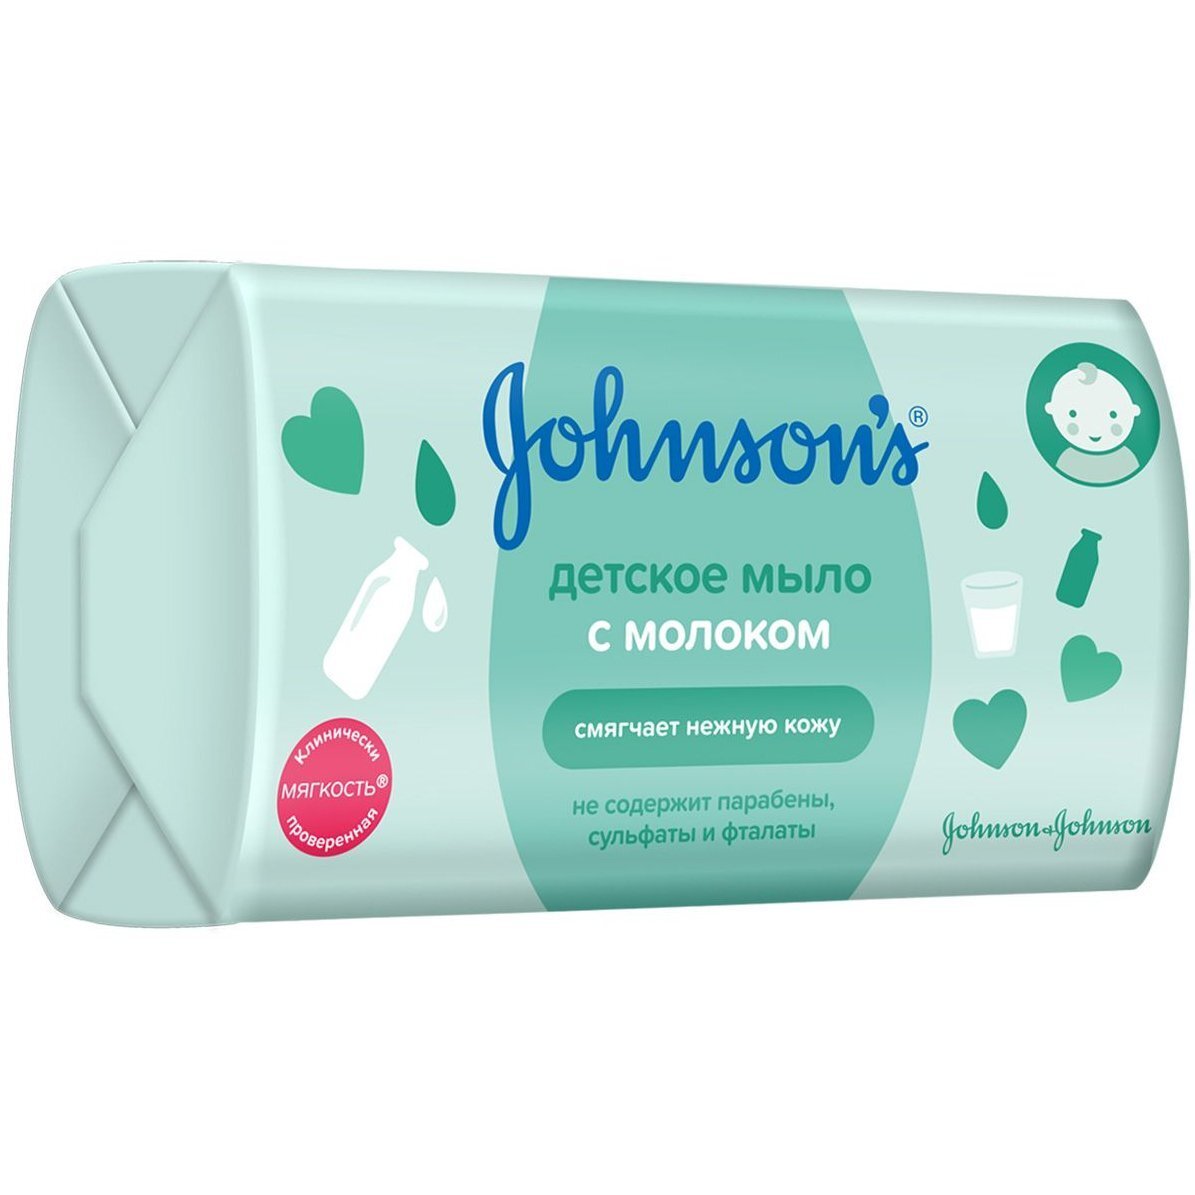 Johnson’s baby Детское мыло Молоко 100 г фото 